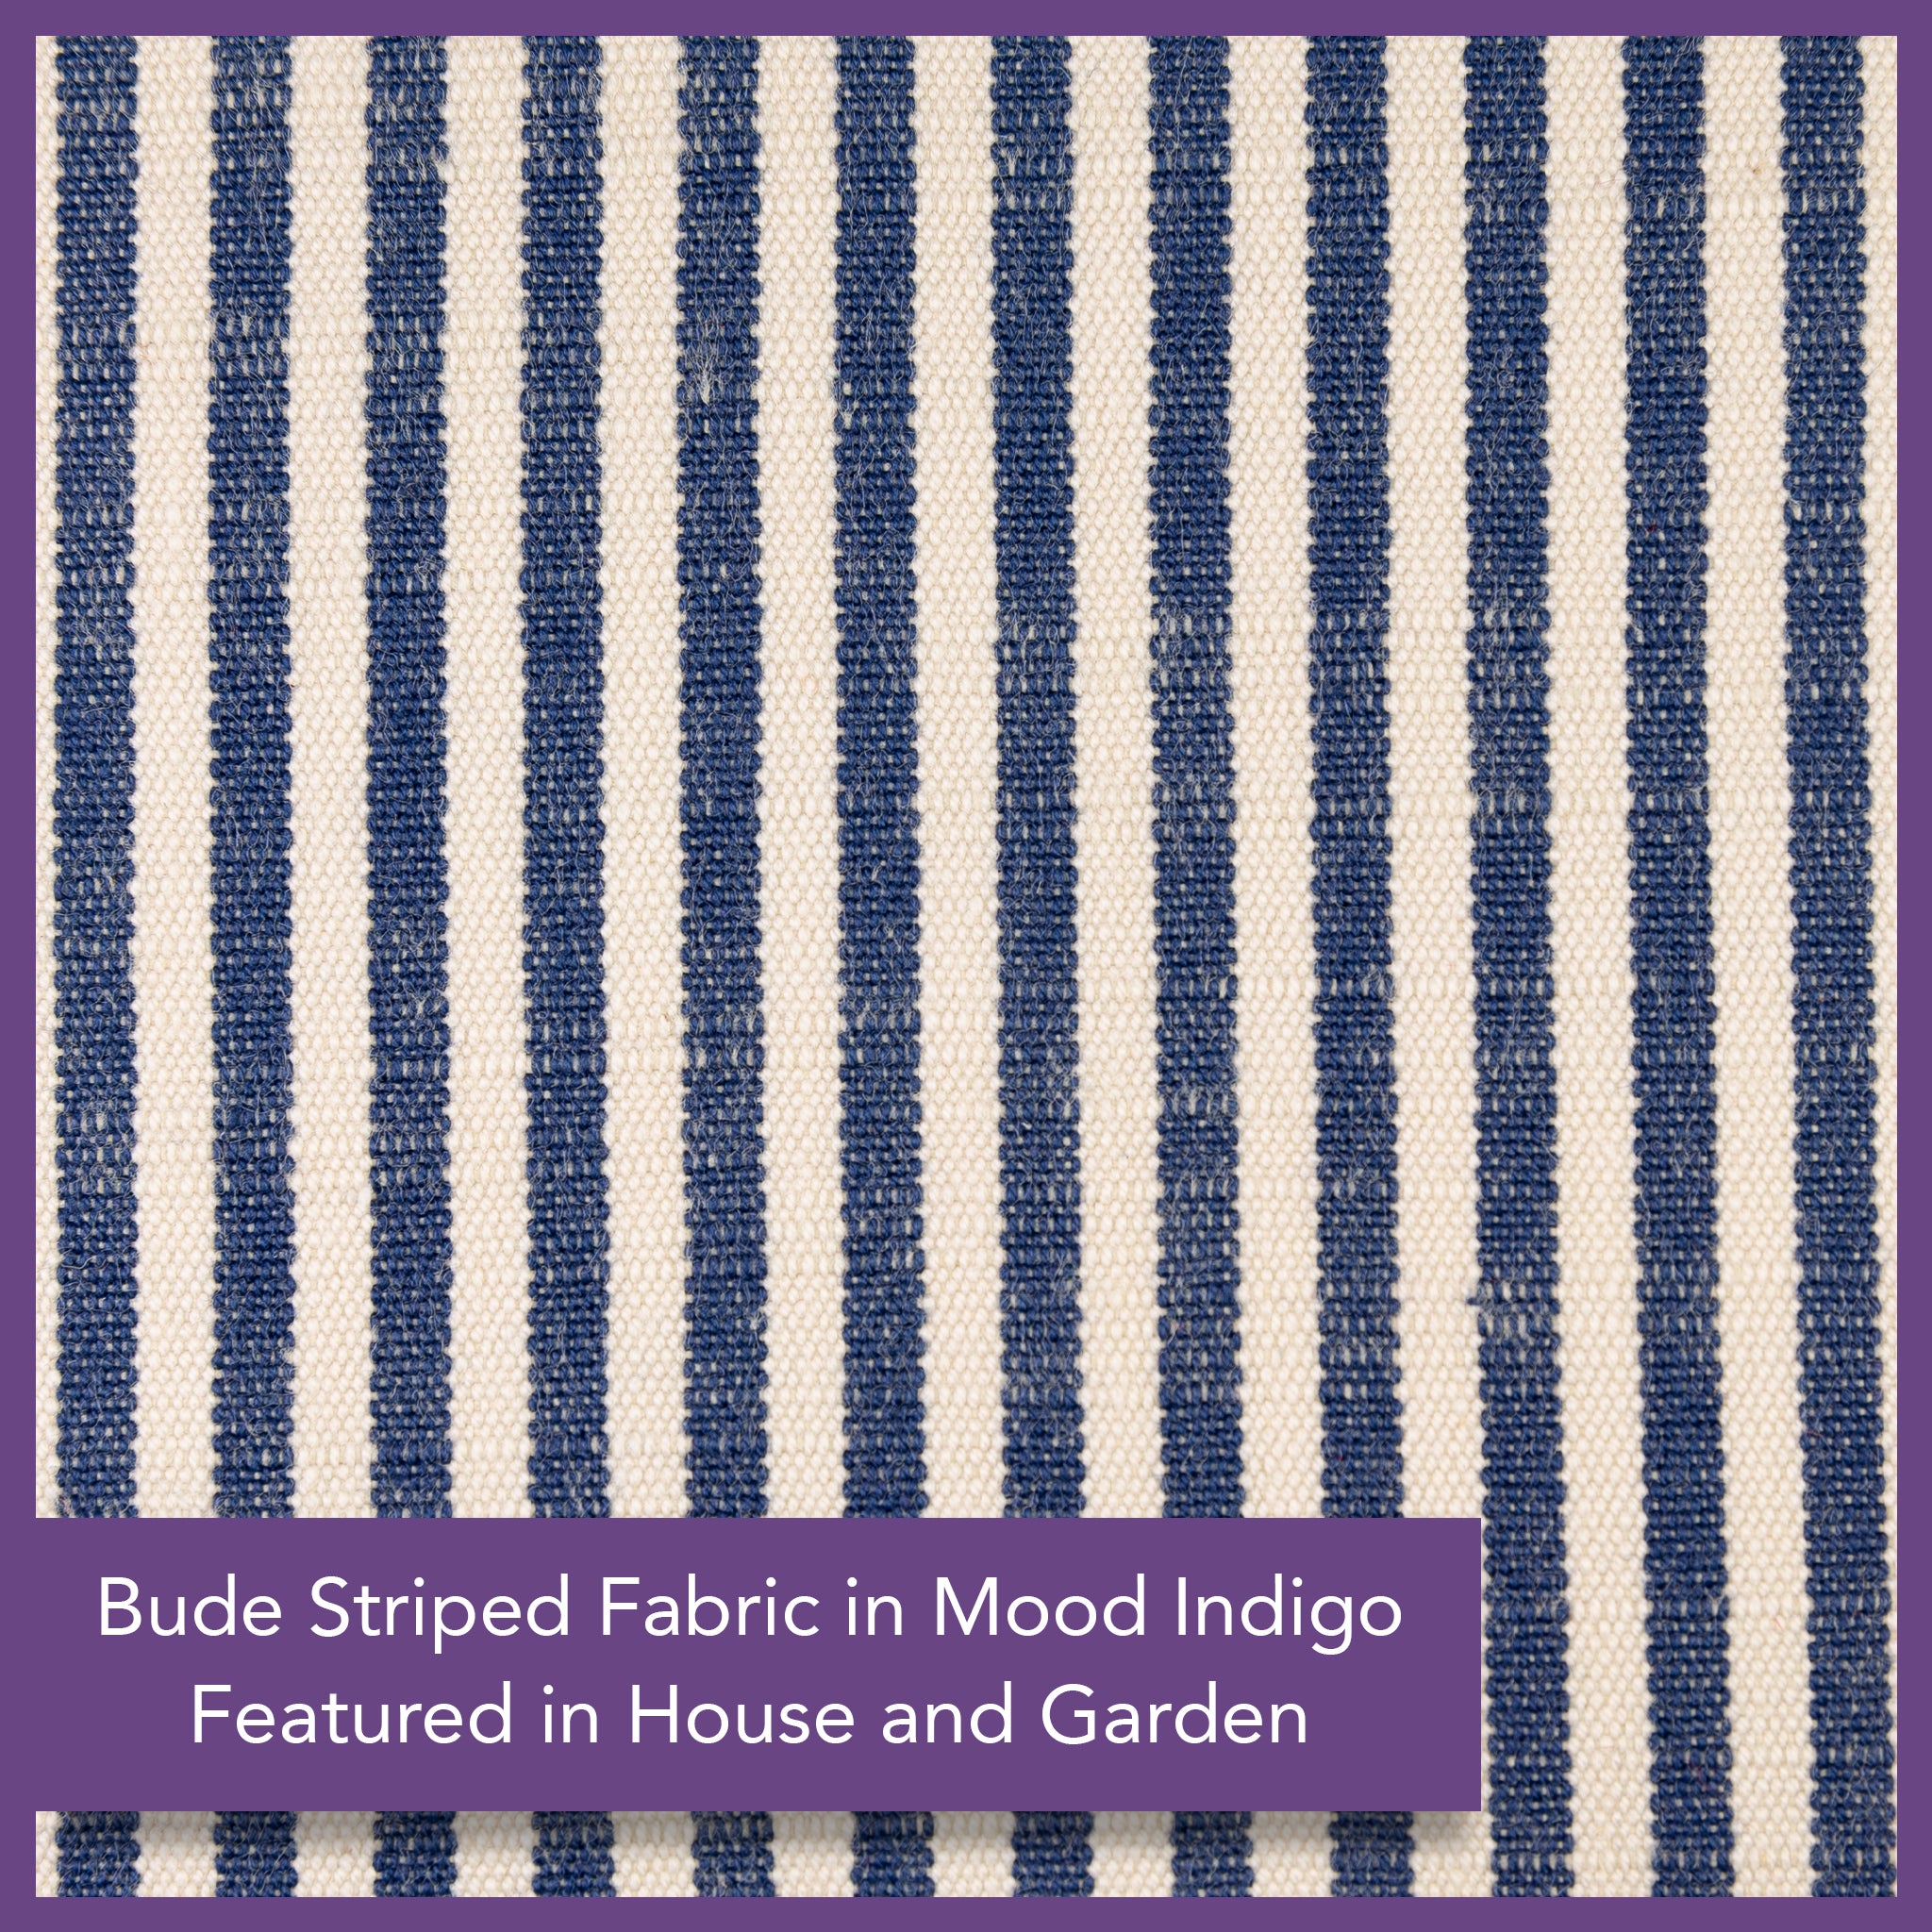 Woven Striped Fabric - Bude - Mood Indigo